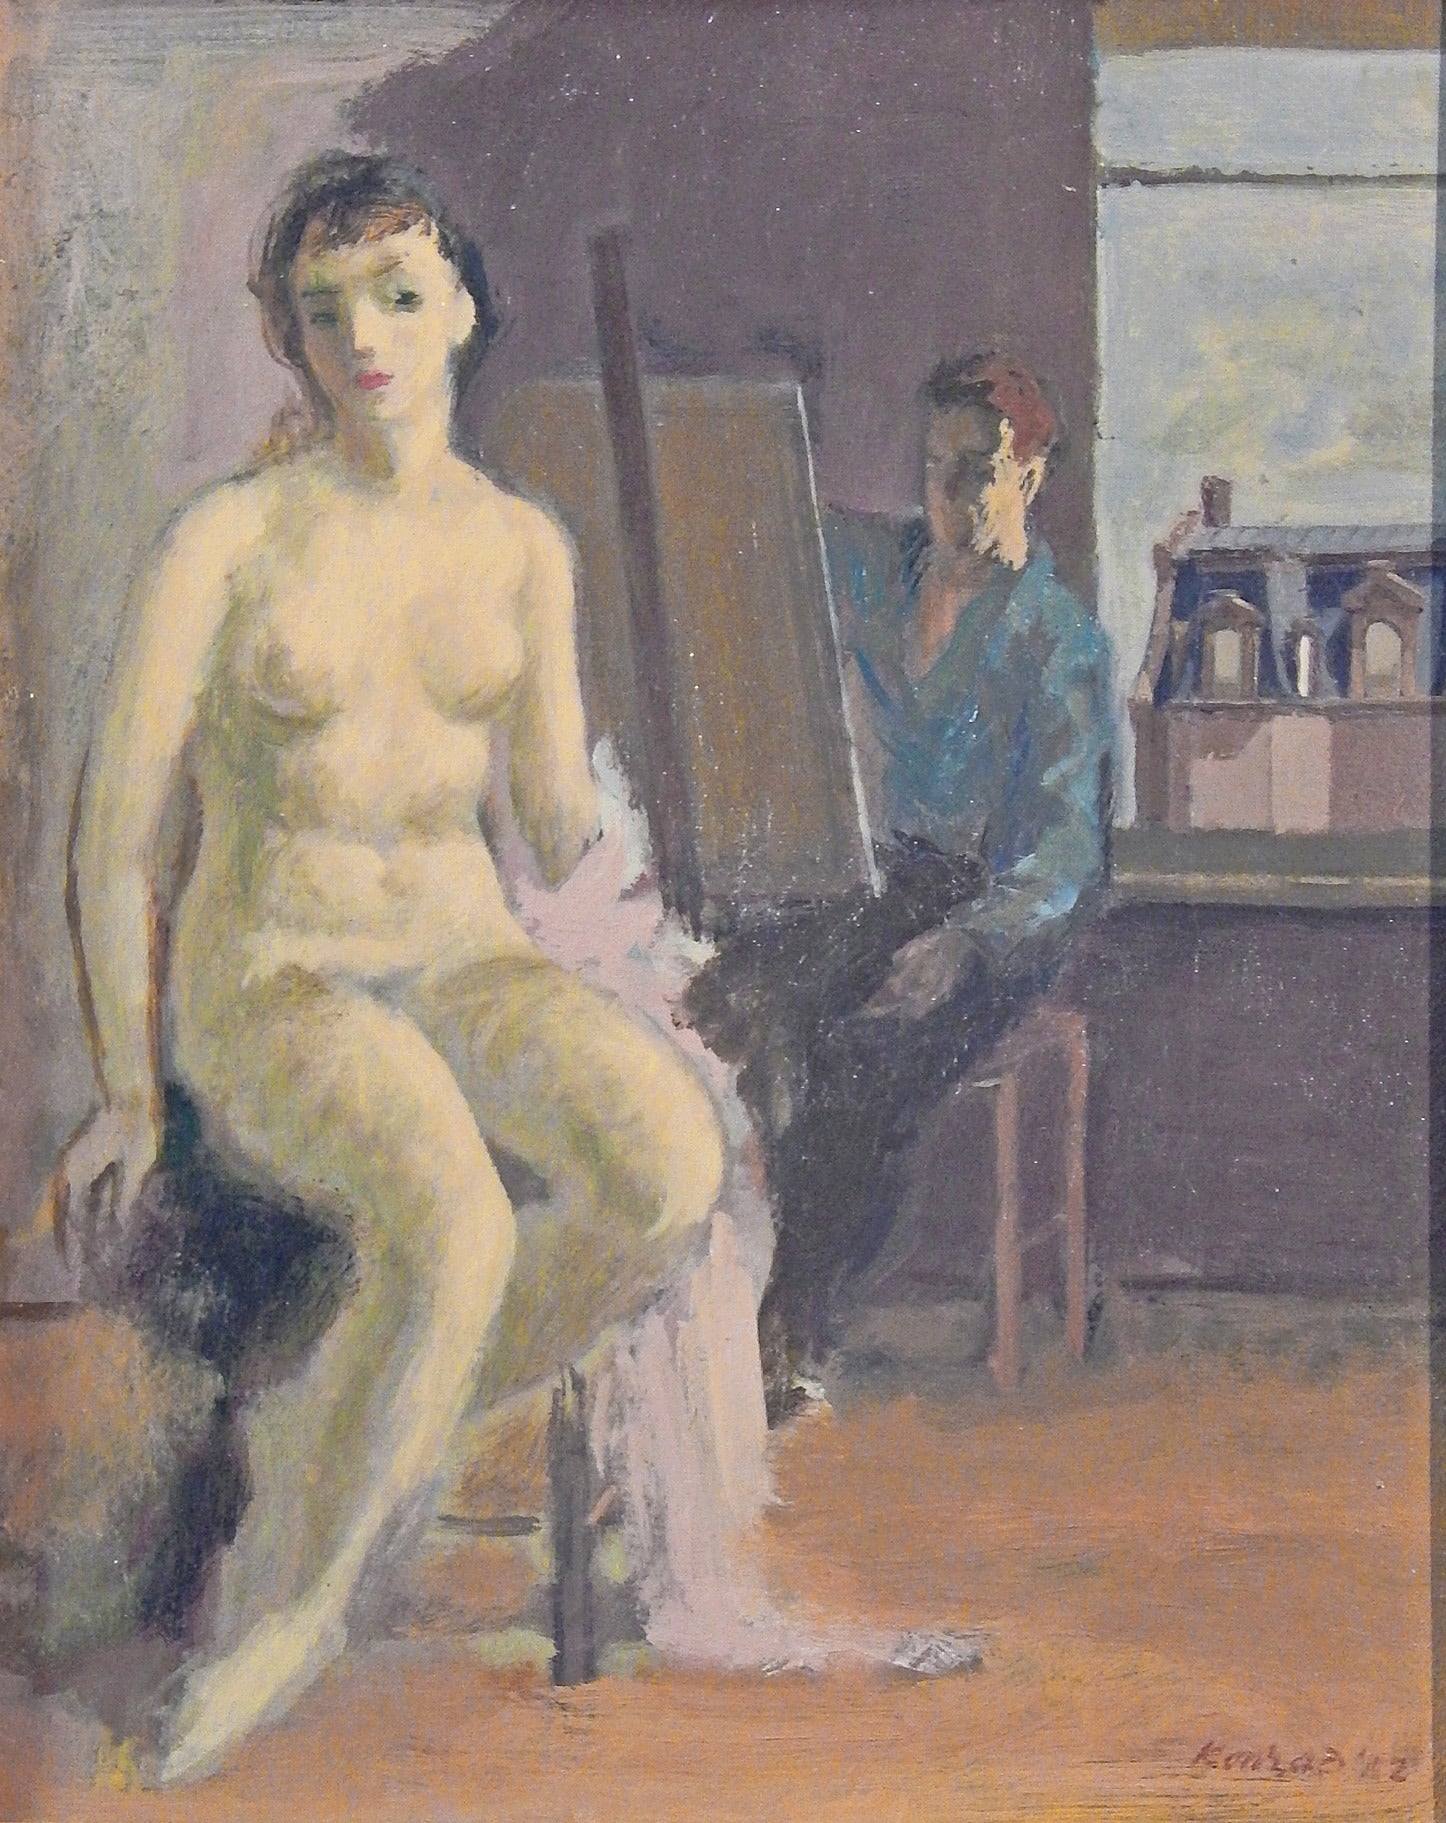 "Artist and Nude Model" Painting by Adolf Konrad, 1952